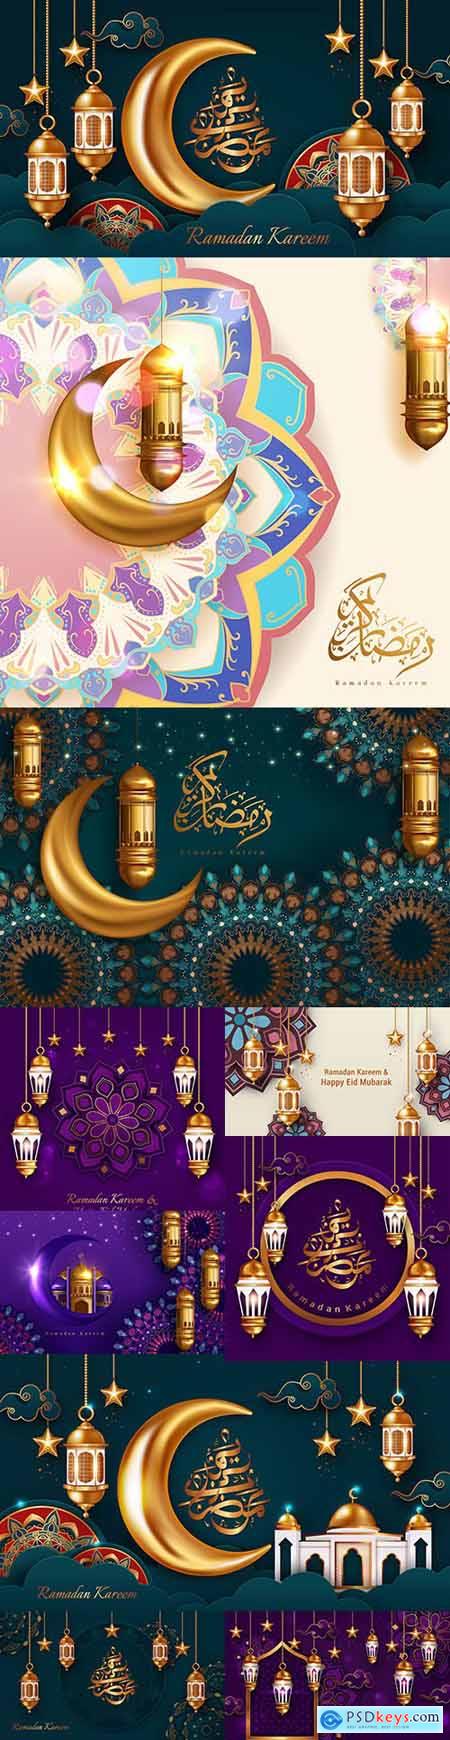 Ramadan Kareem backgrounds with golden lantern and crescent